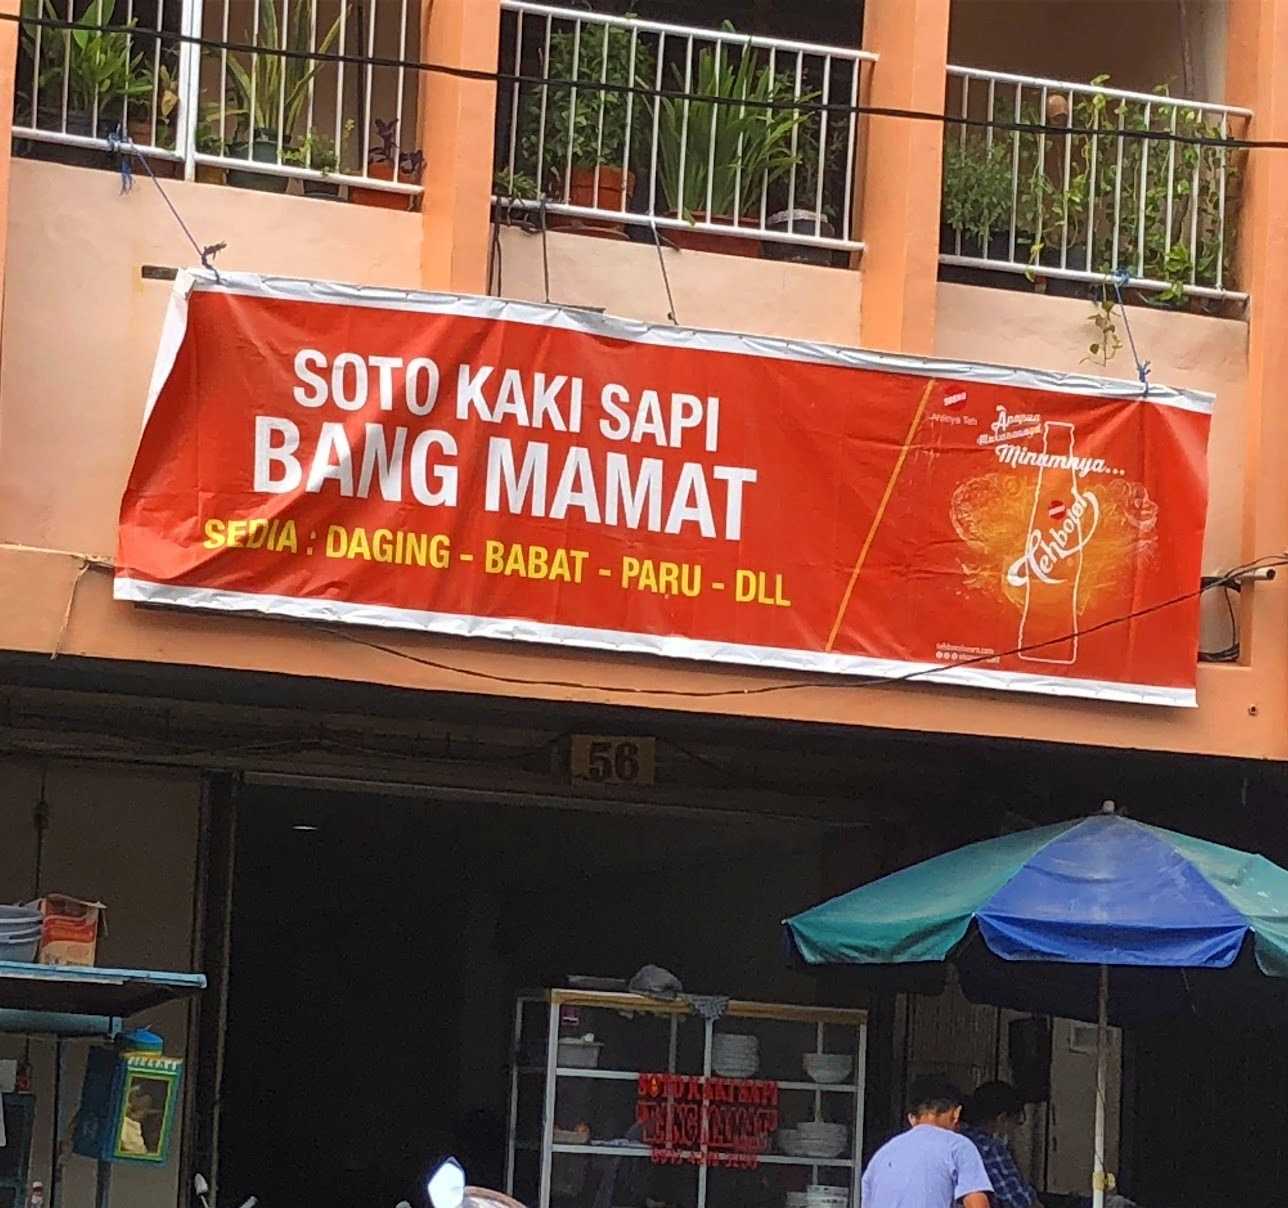 Soto Kaki Sapi Bang Mamat 1